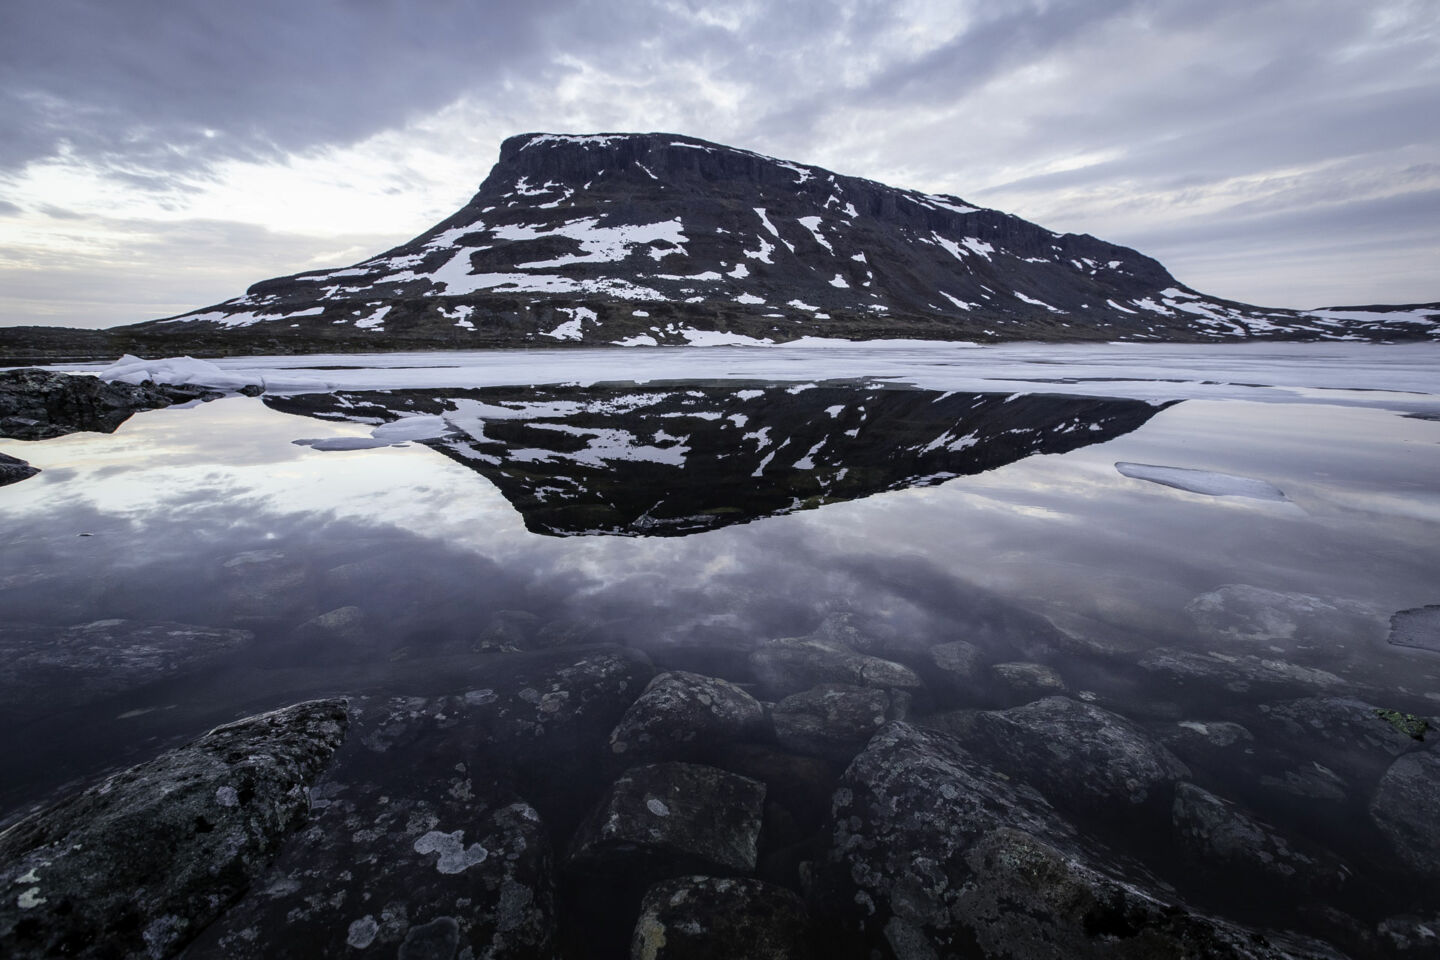 A winter reflection of Mt. Saana, an Arctic fell in Kilpisjärvi, a Finnish Lapland filming location